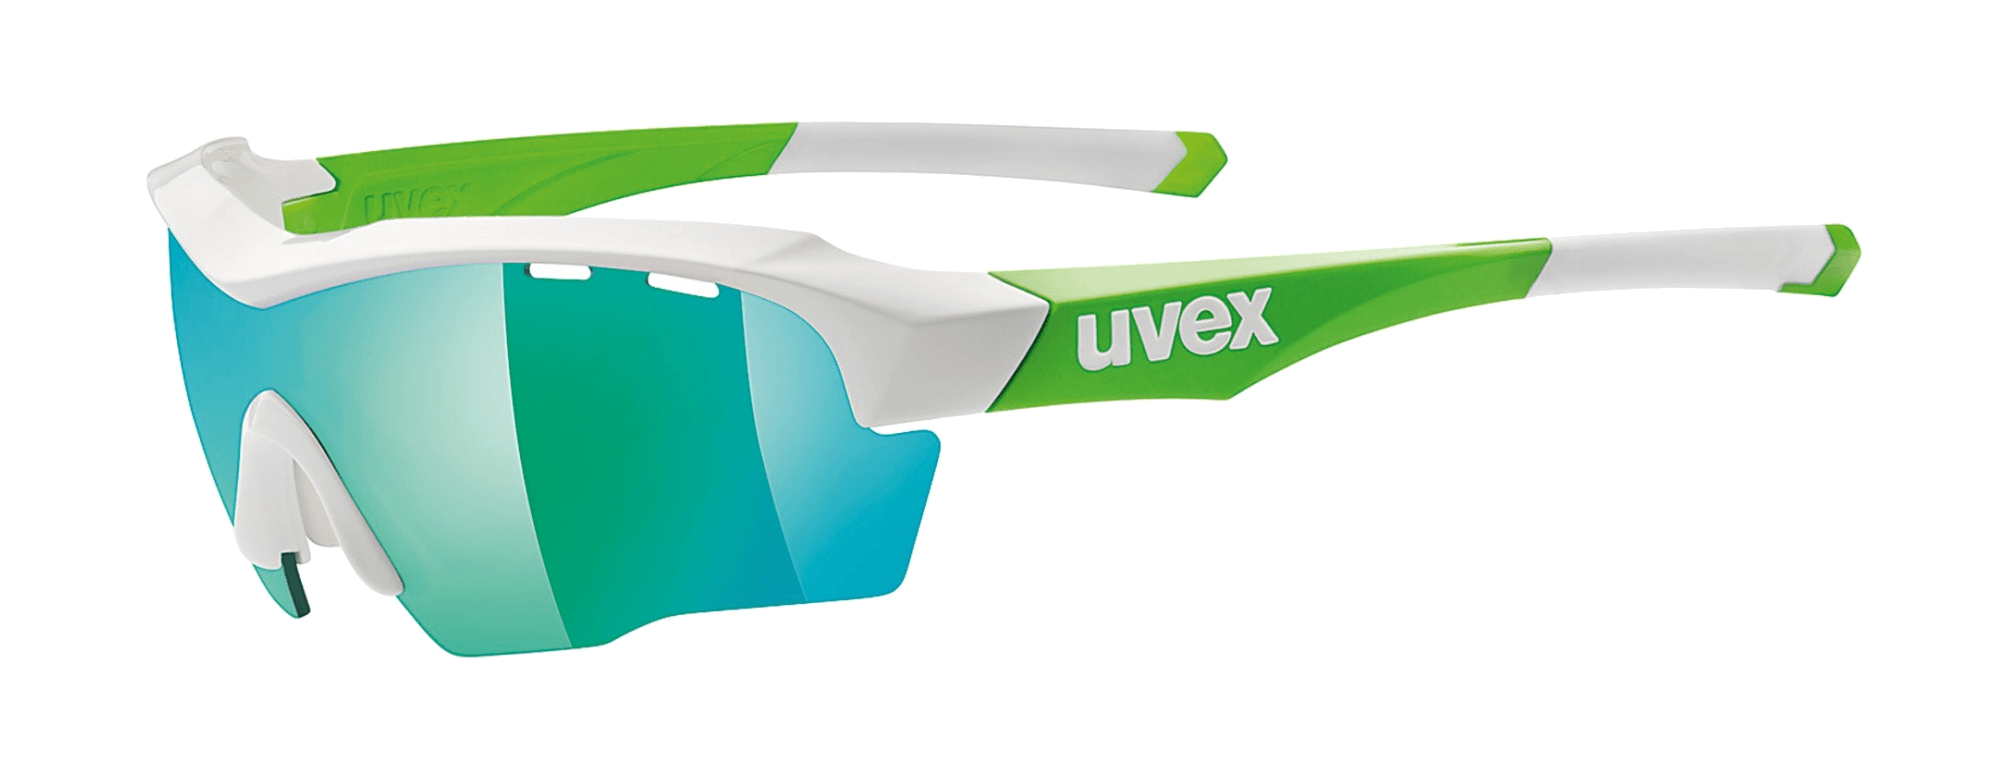 Uvex Sport Sunglasses Png Image PNG Image